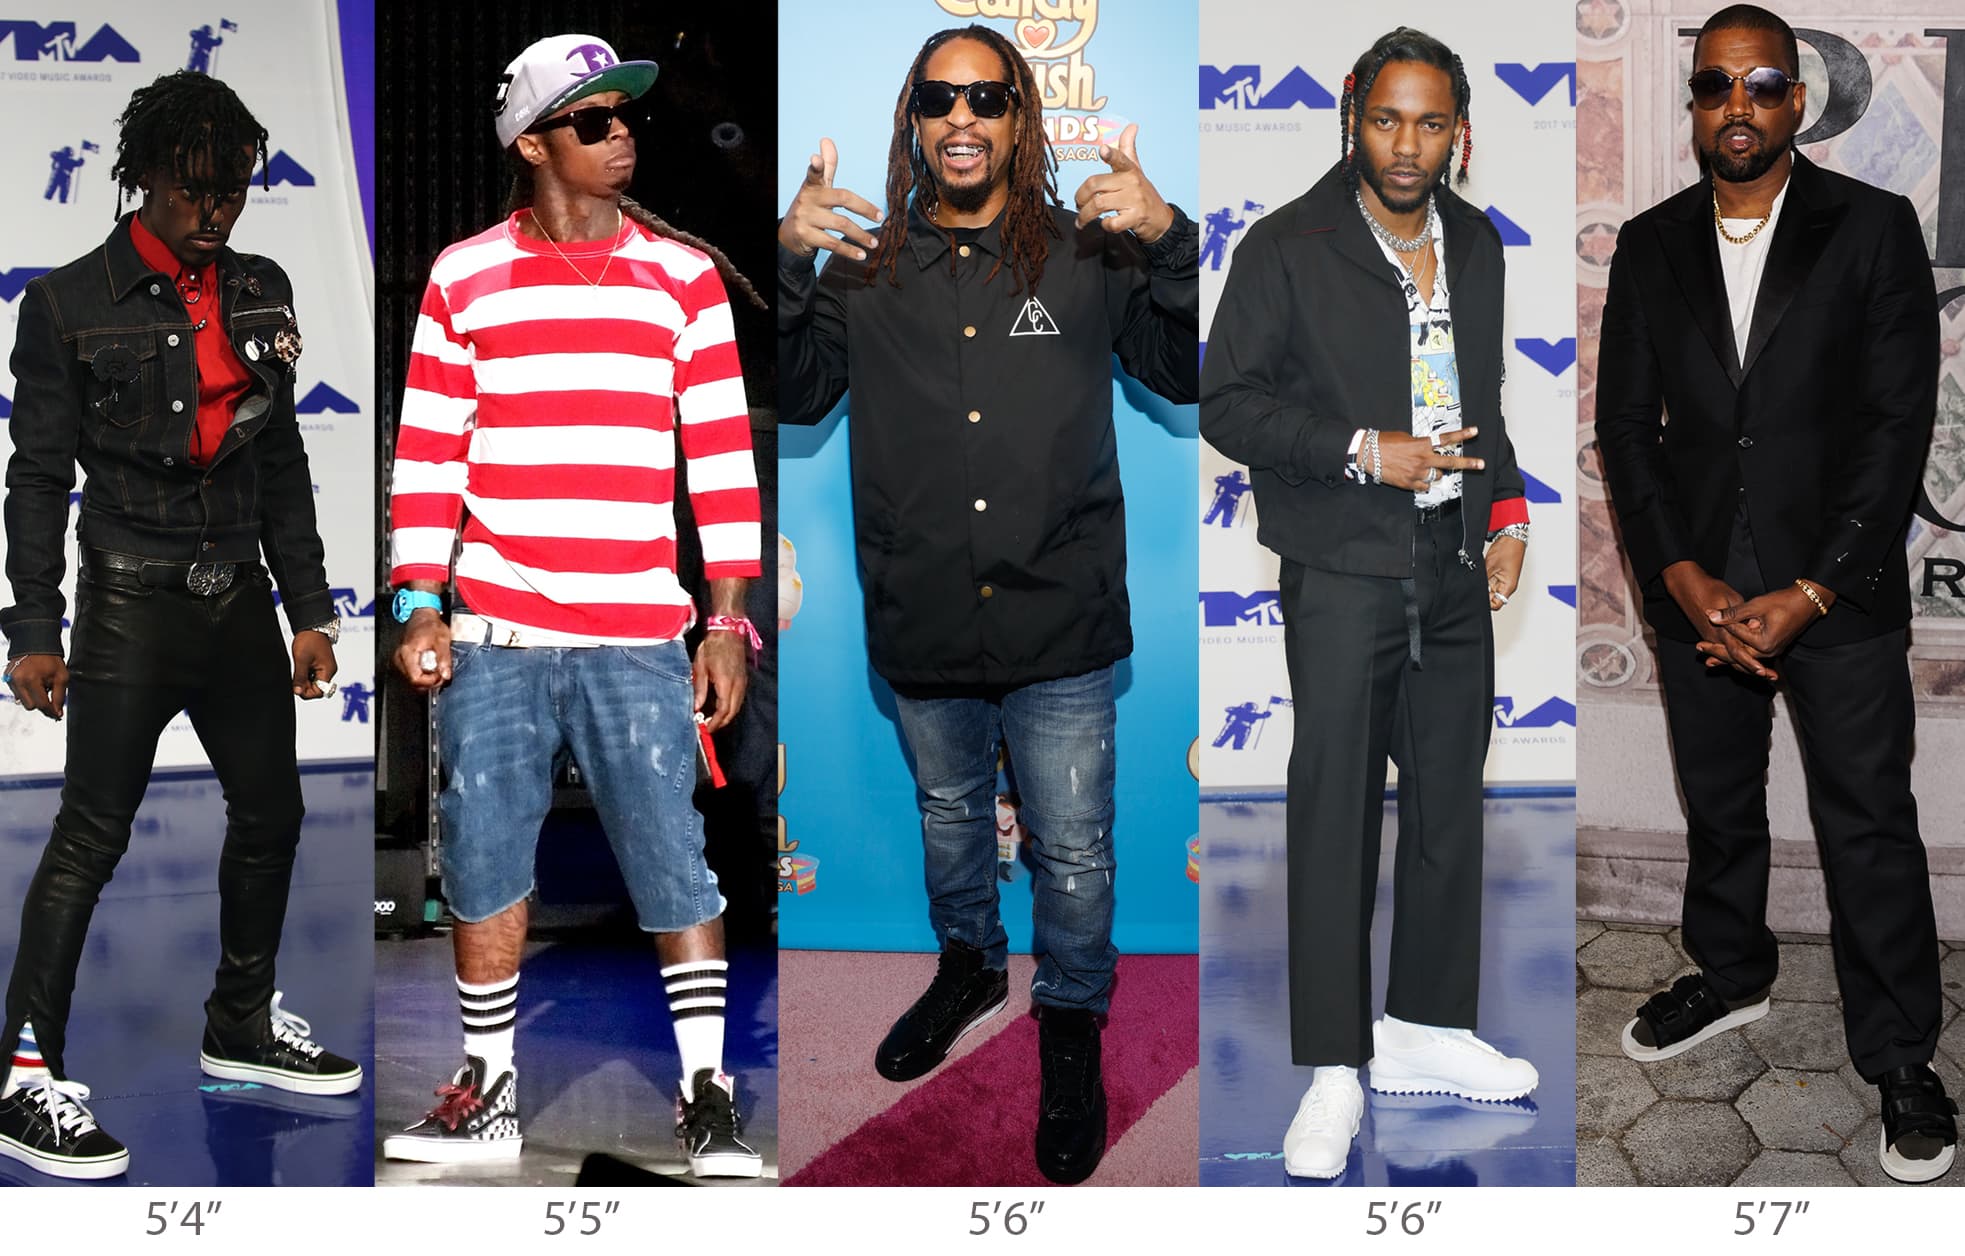 Popular rappers Lil Uzi Vert, Lil Wayne, Lil Jon, Kendrick Lamar, and Kanye West fall below the national average height